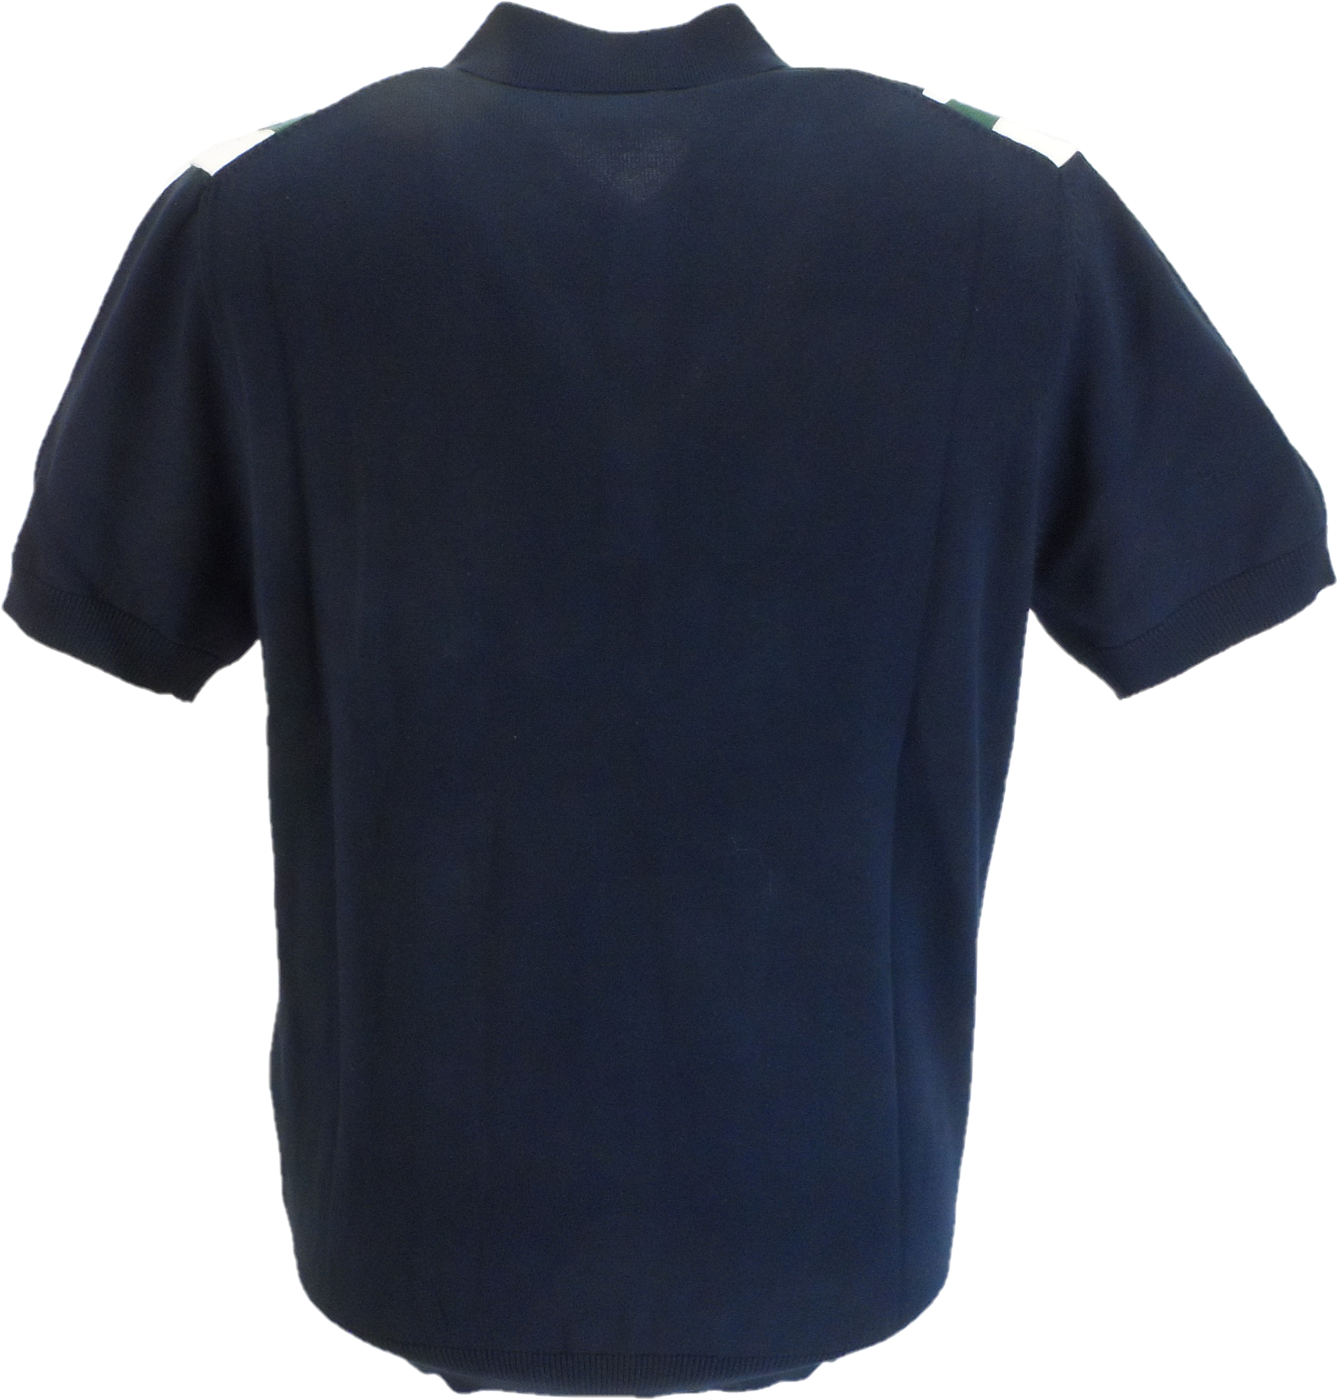 Ben Sherman Navy Blue Knitted Striped Mod Polo Shirt